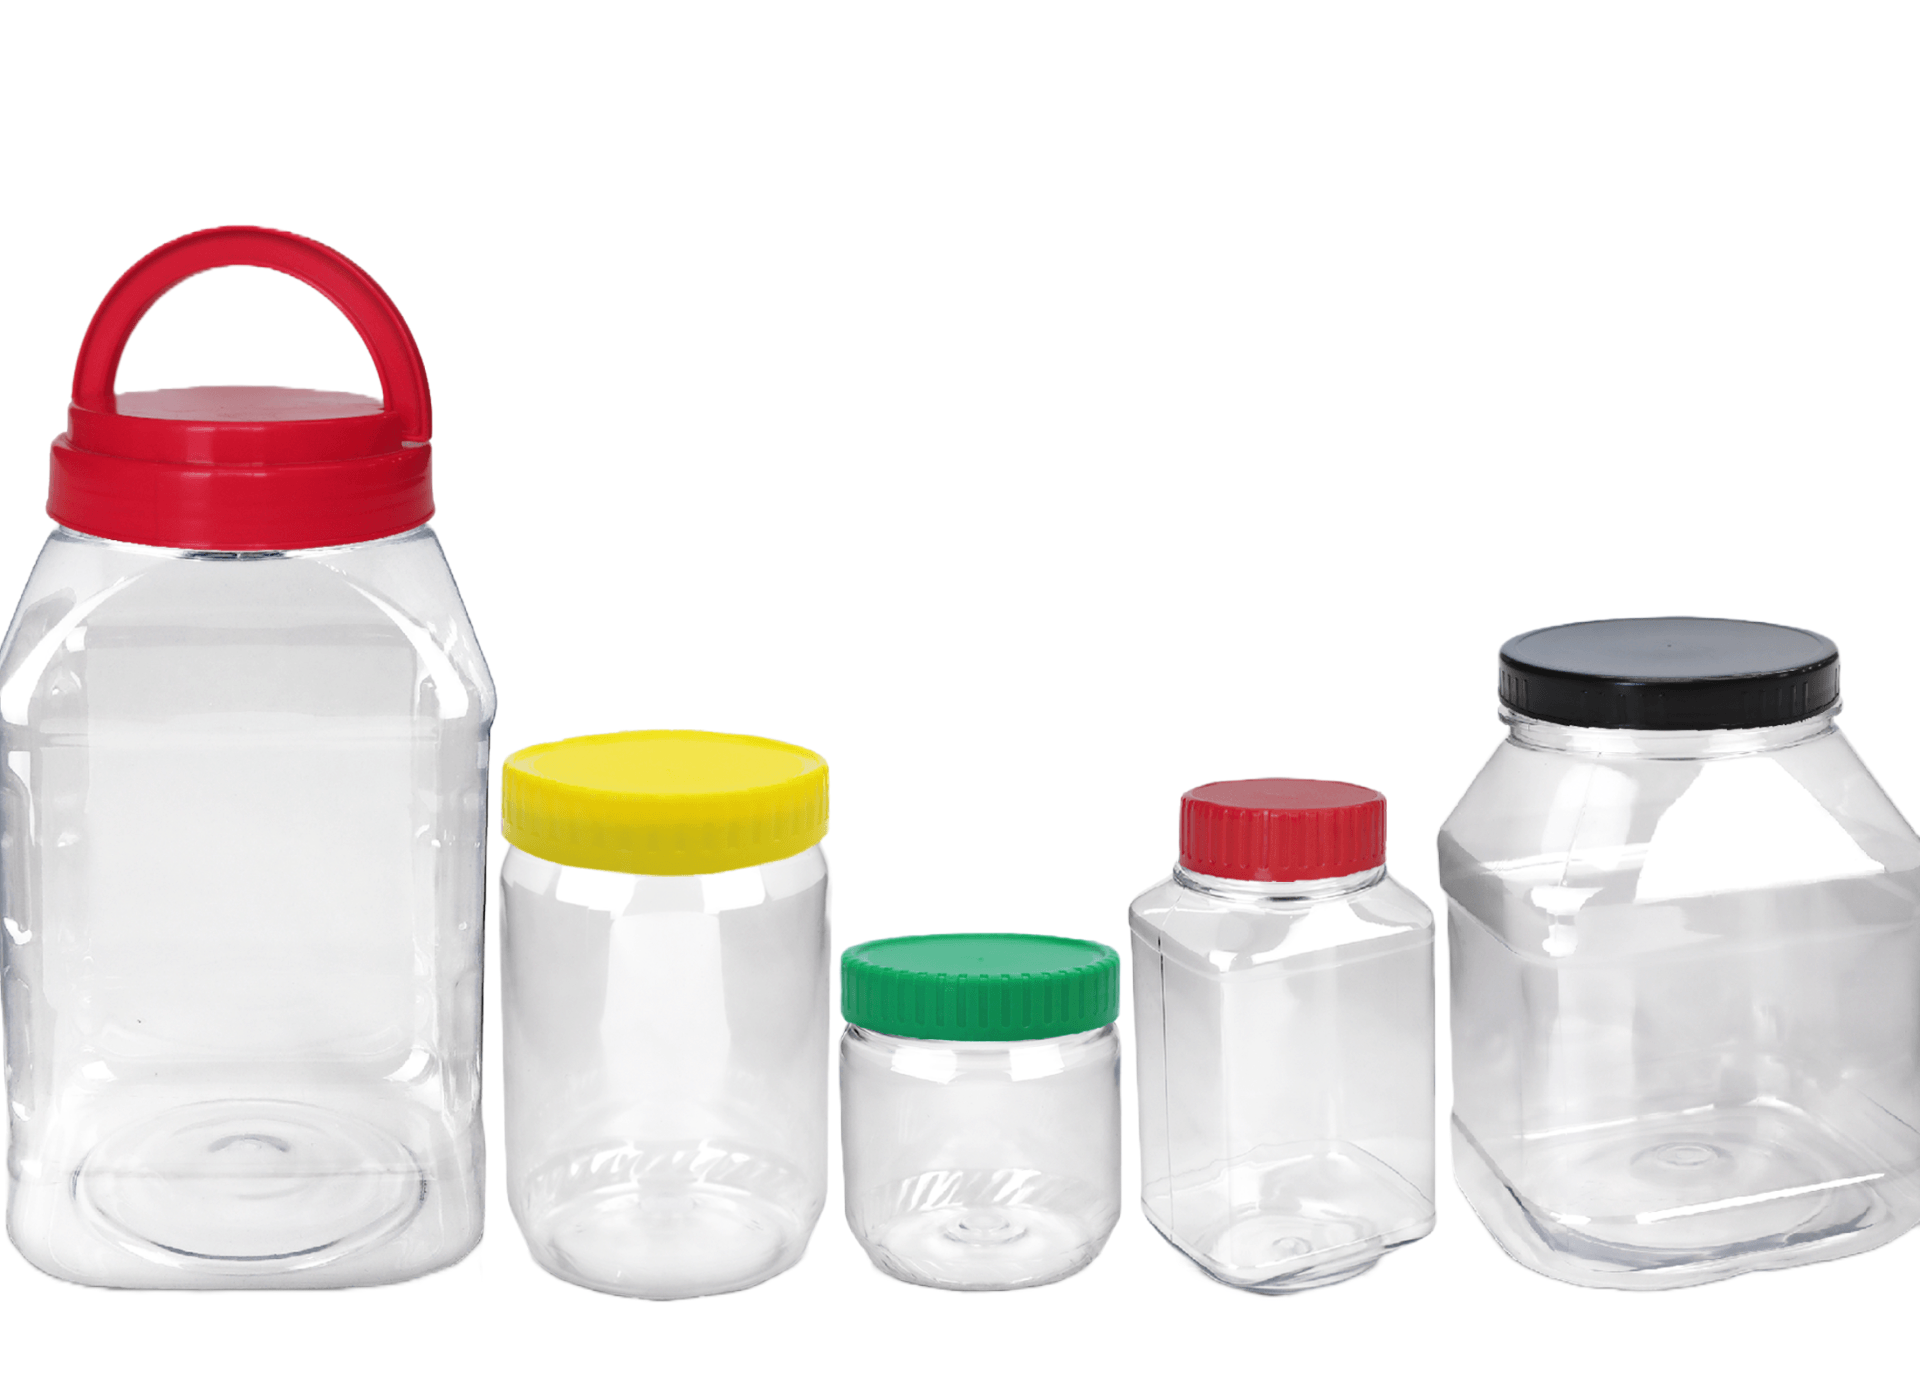 PET Jars and bottles